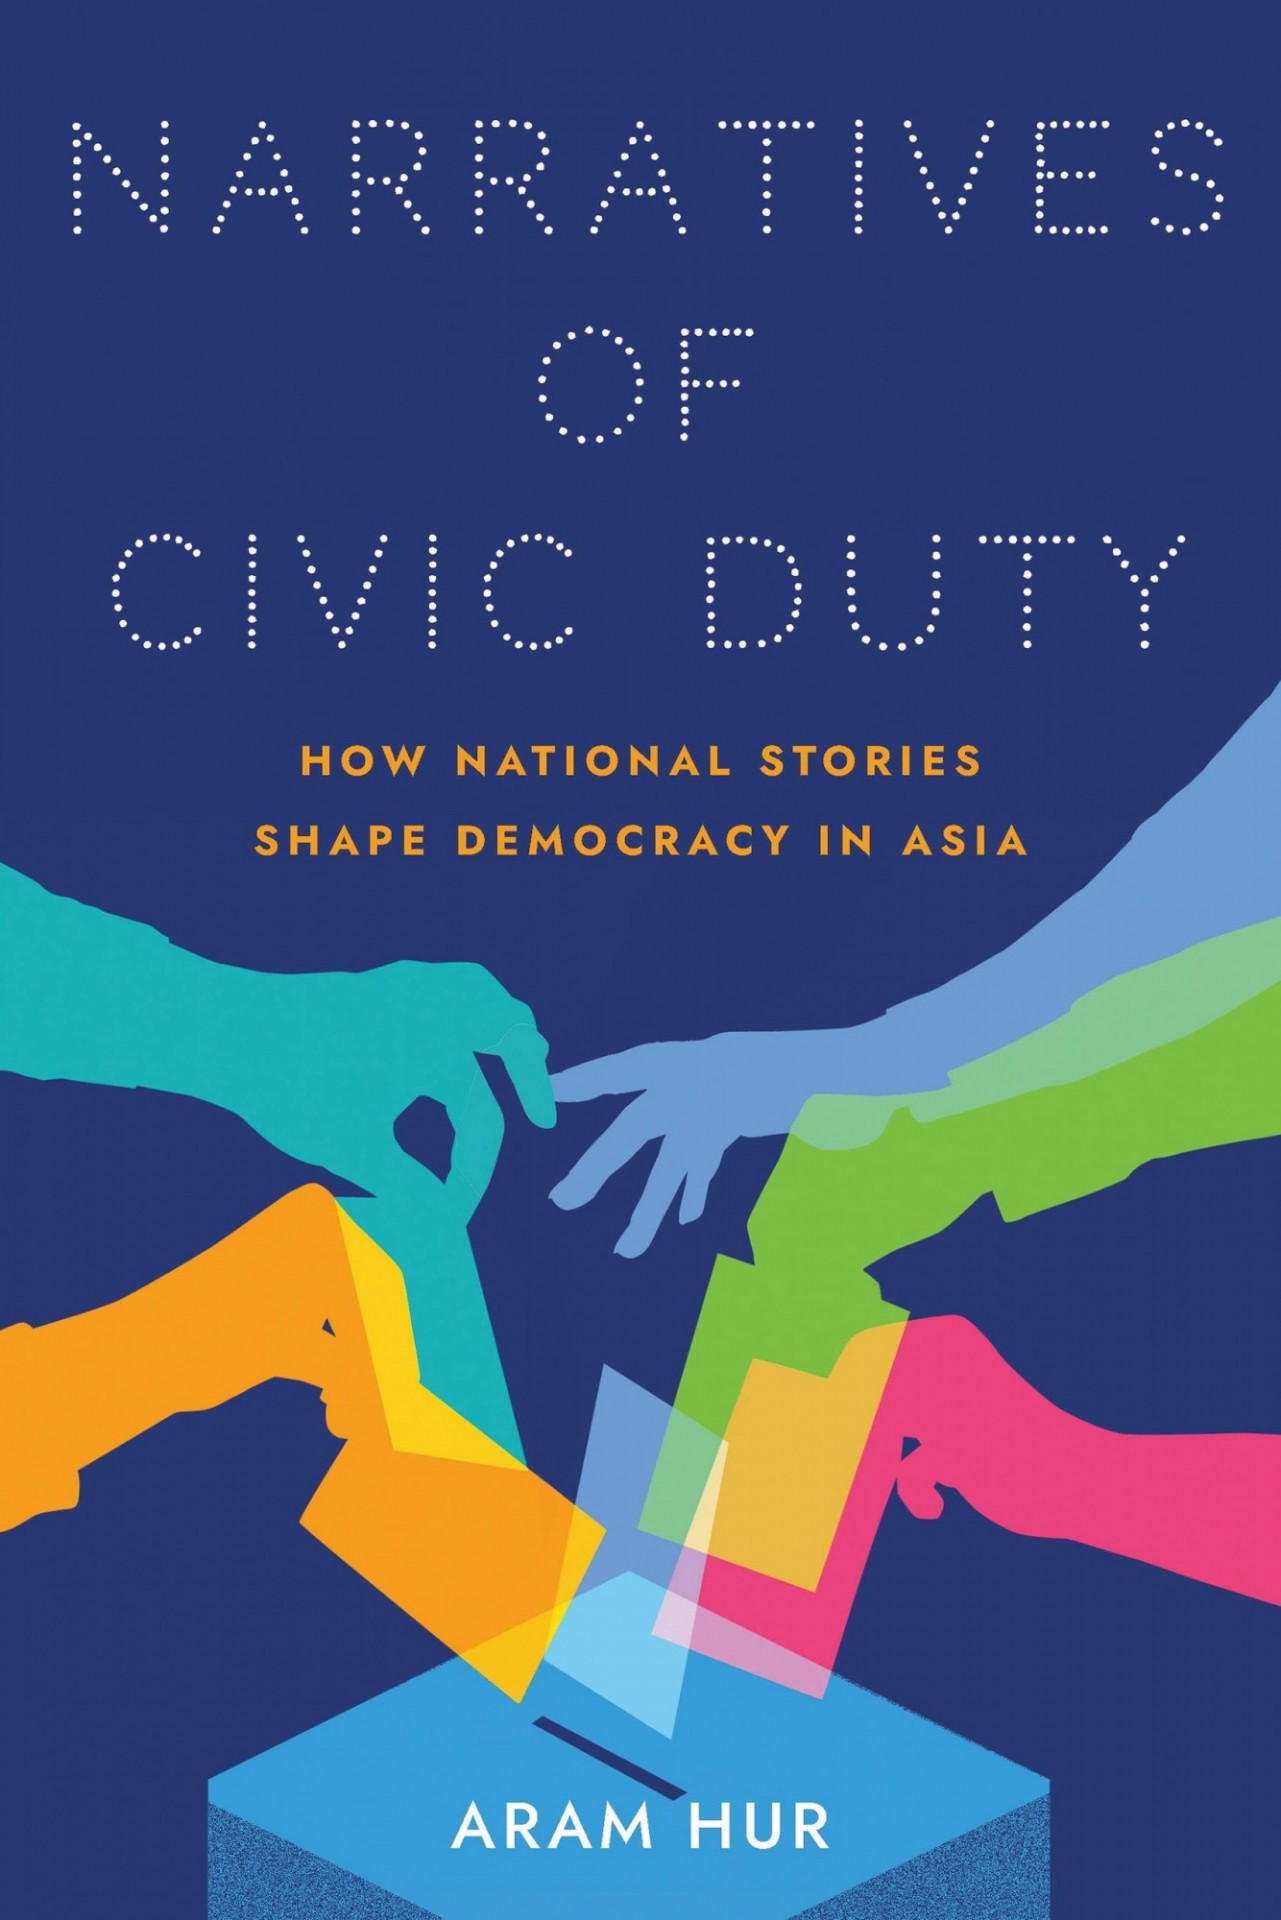 aram-hur-narratives-of-civic-duty-how-national-stories-shape